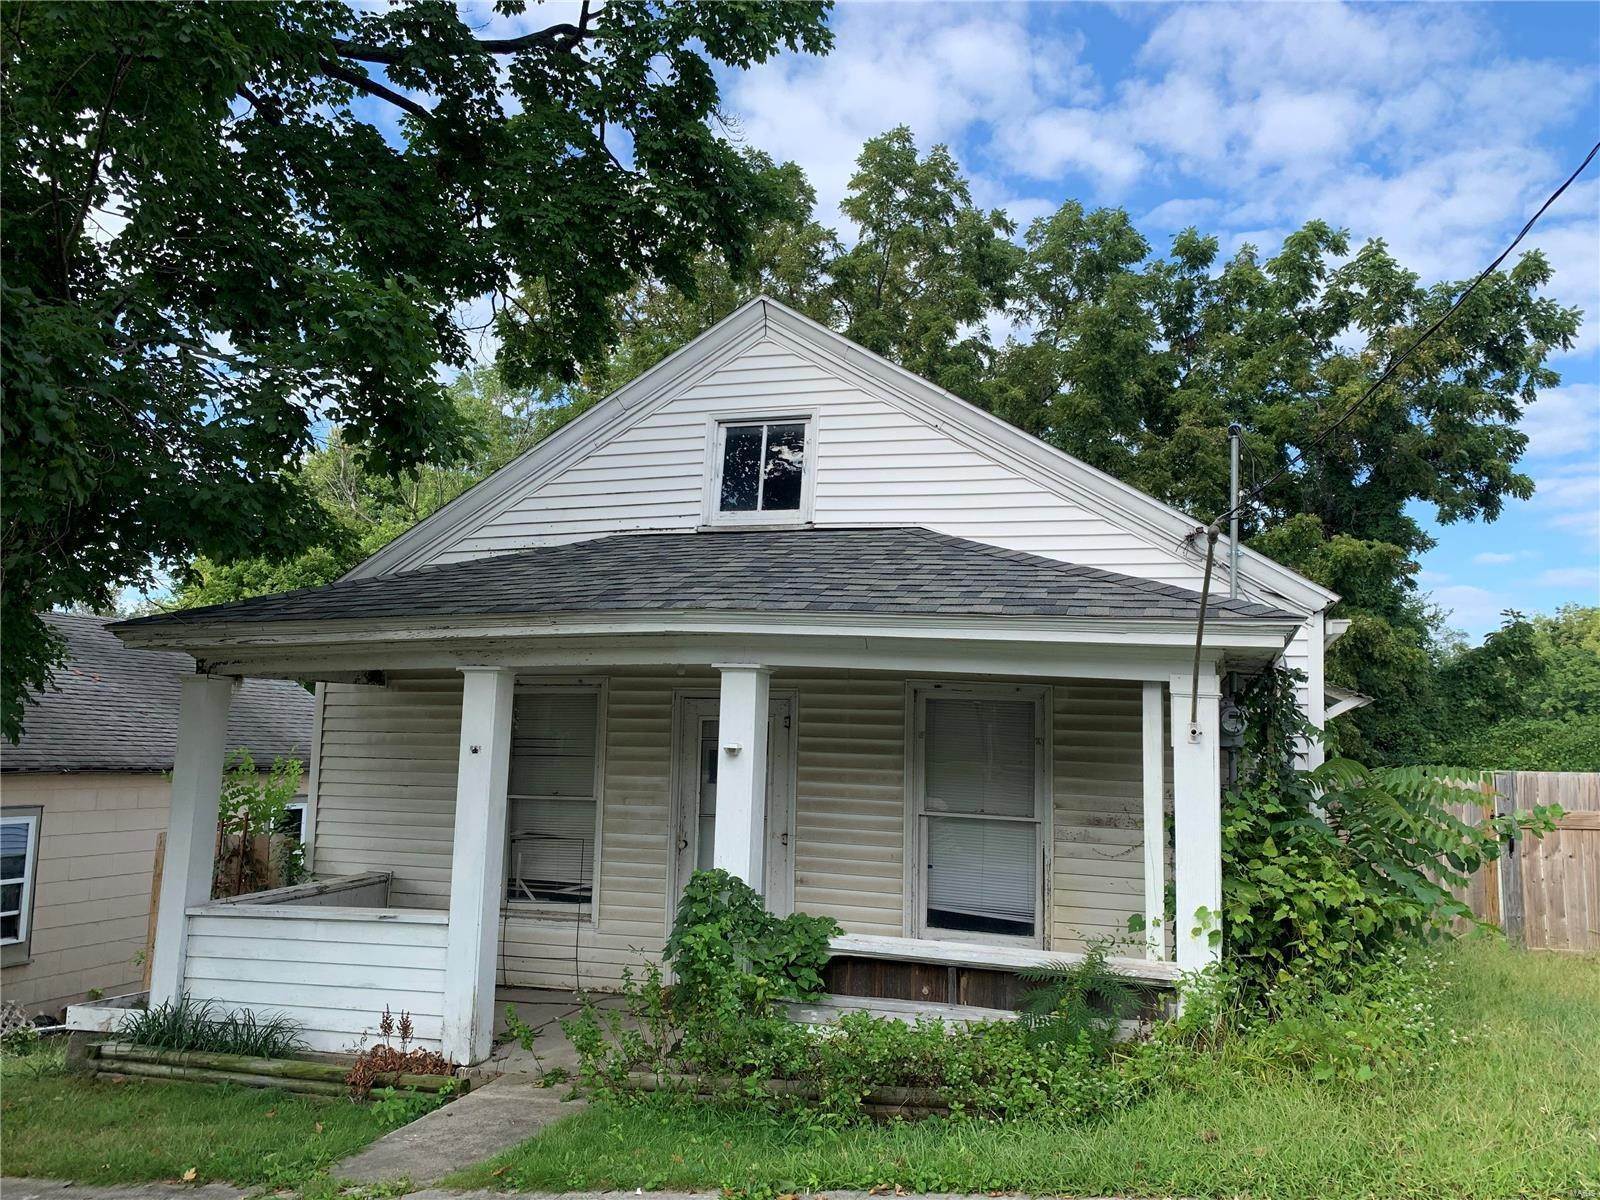 Property for Sale at 913 Georgia Street Hannibal, Missouri 63401 United States